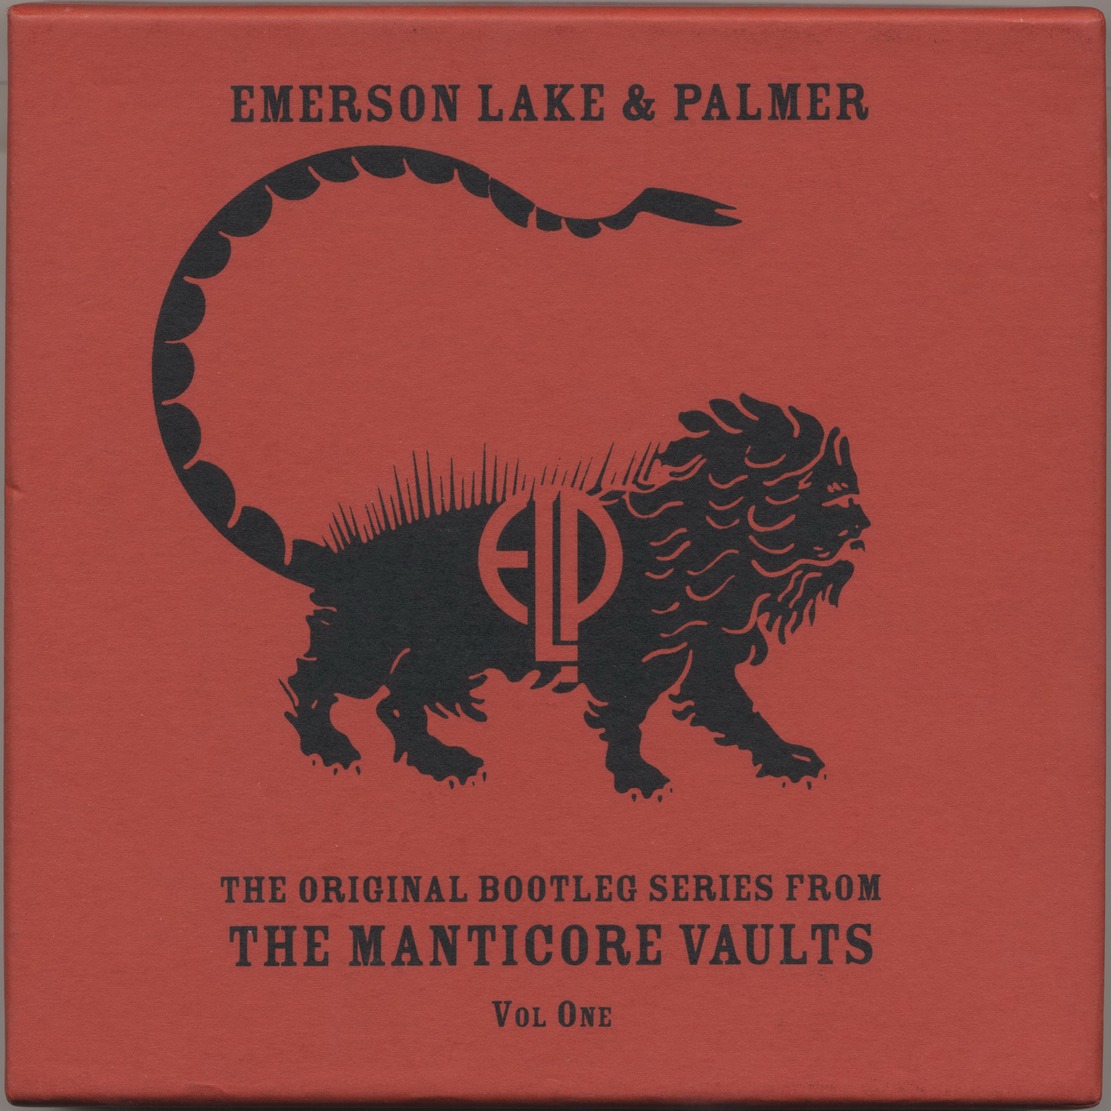 Emerson Lake & Palmer - The Manticore Vaults Vol.1 Set 1 (2001) [2CD]